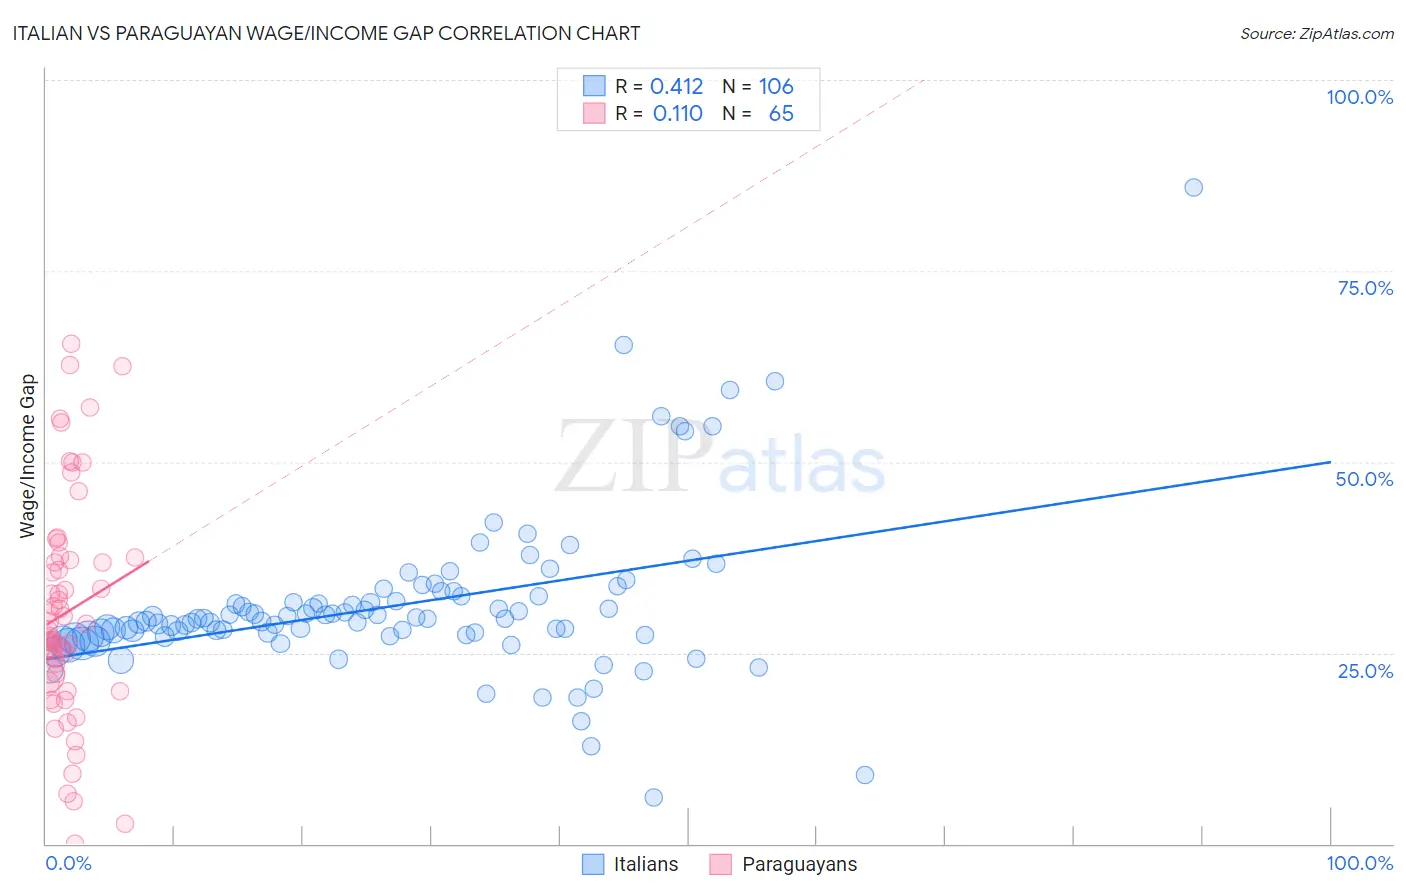 Italian vs Paraguayan Wage/Income Gap